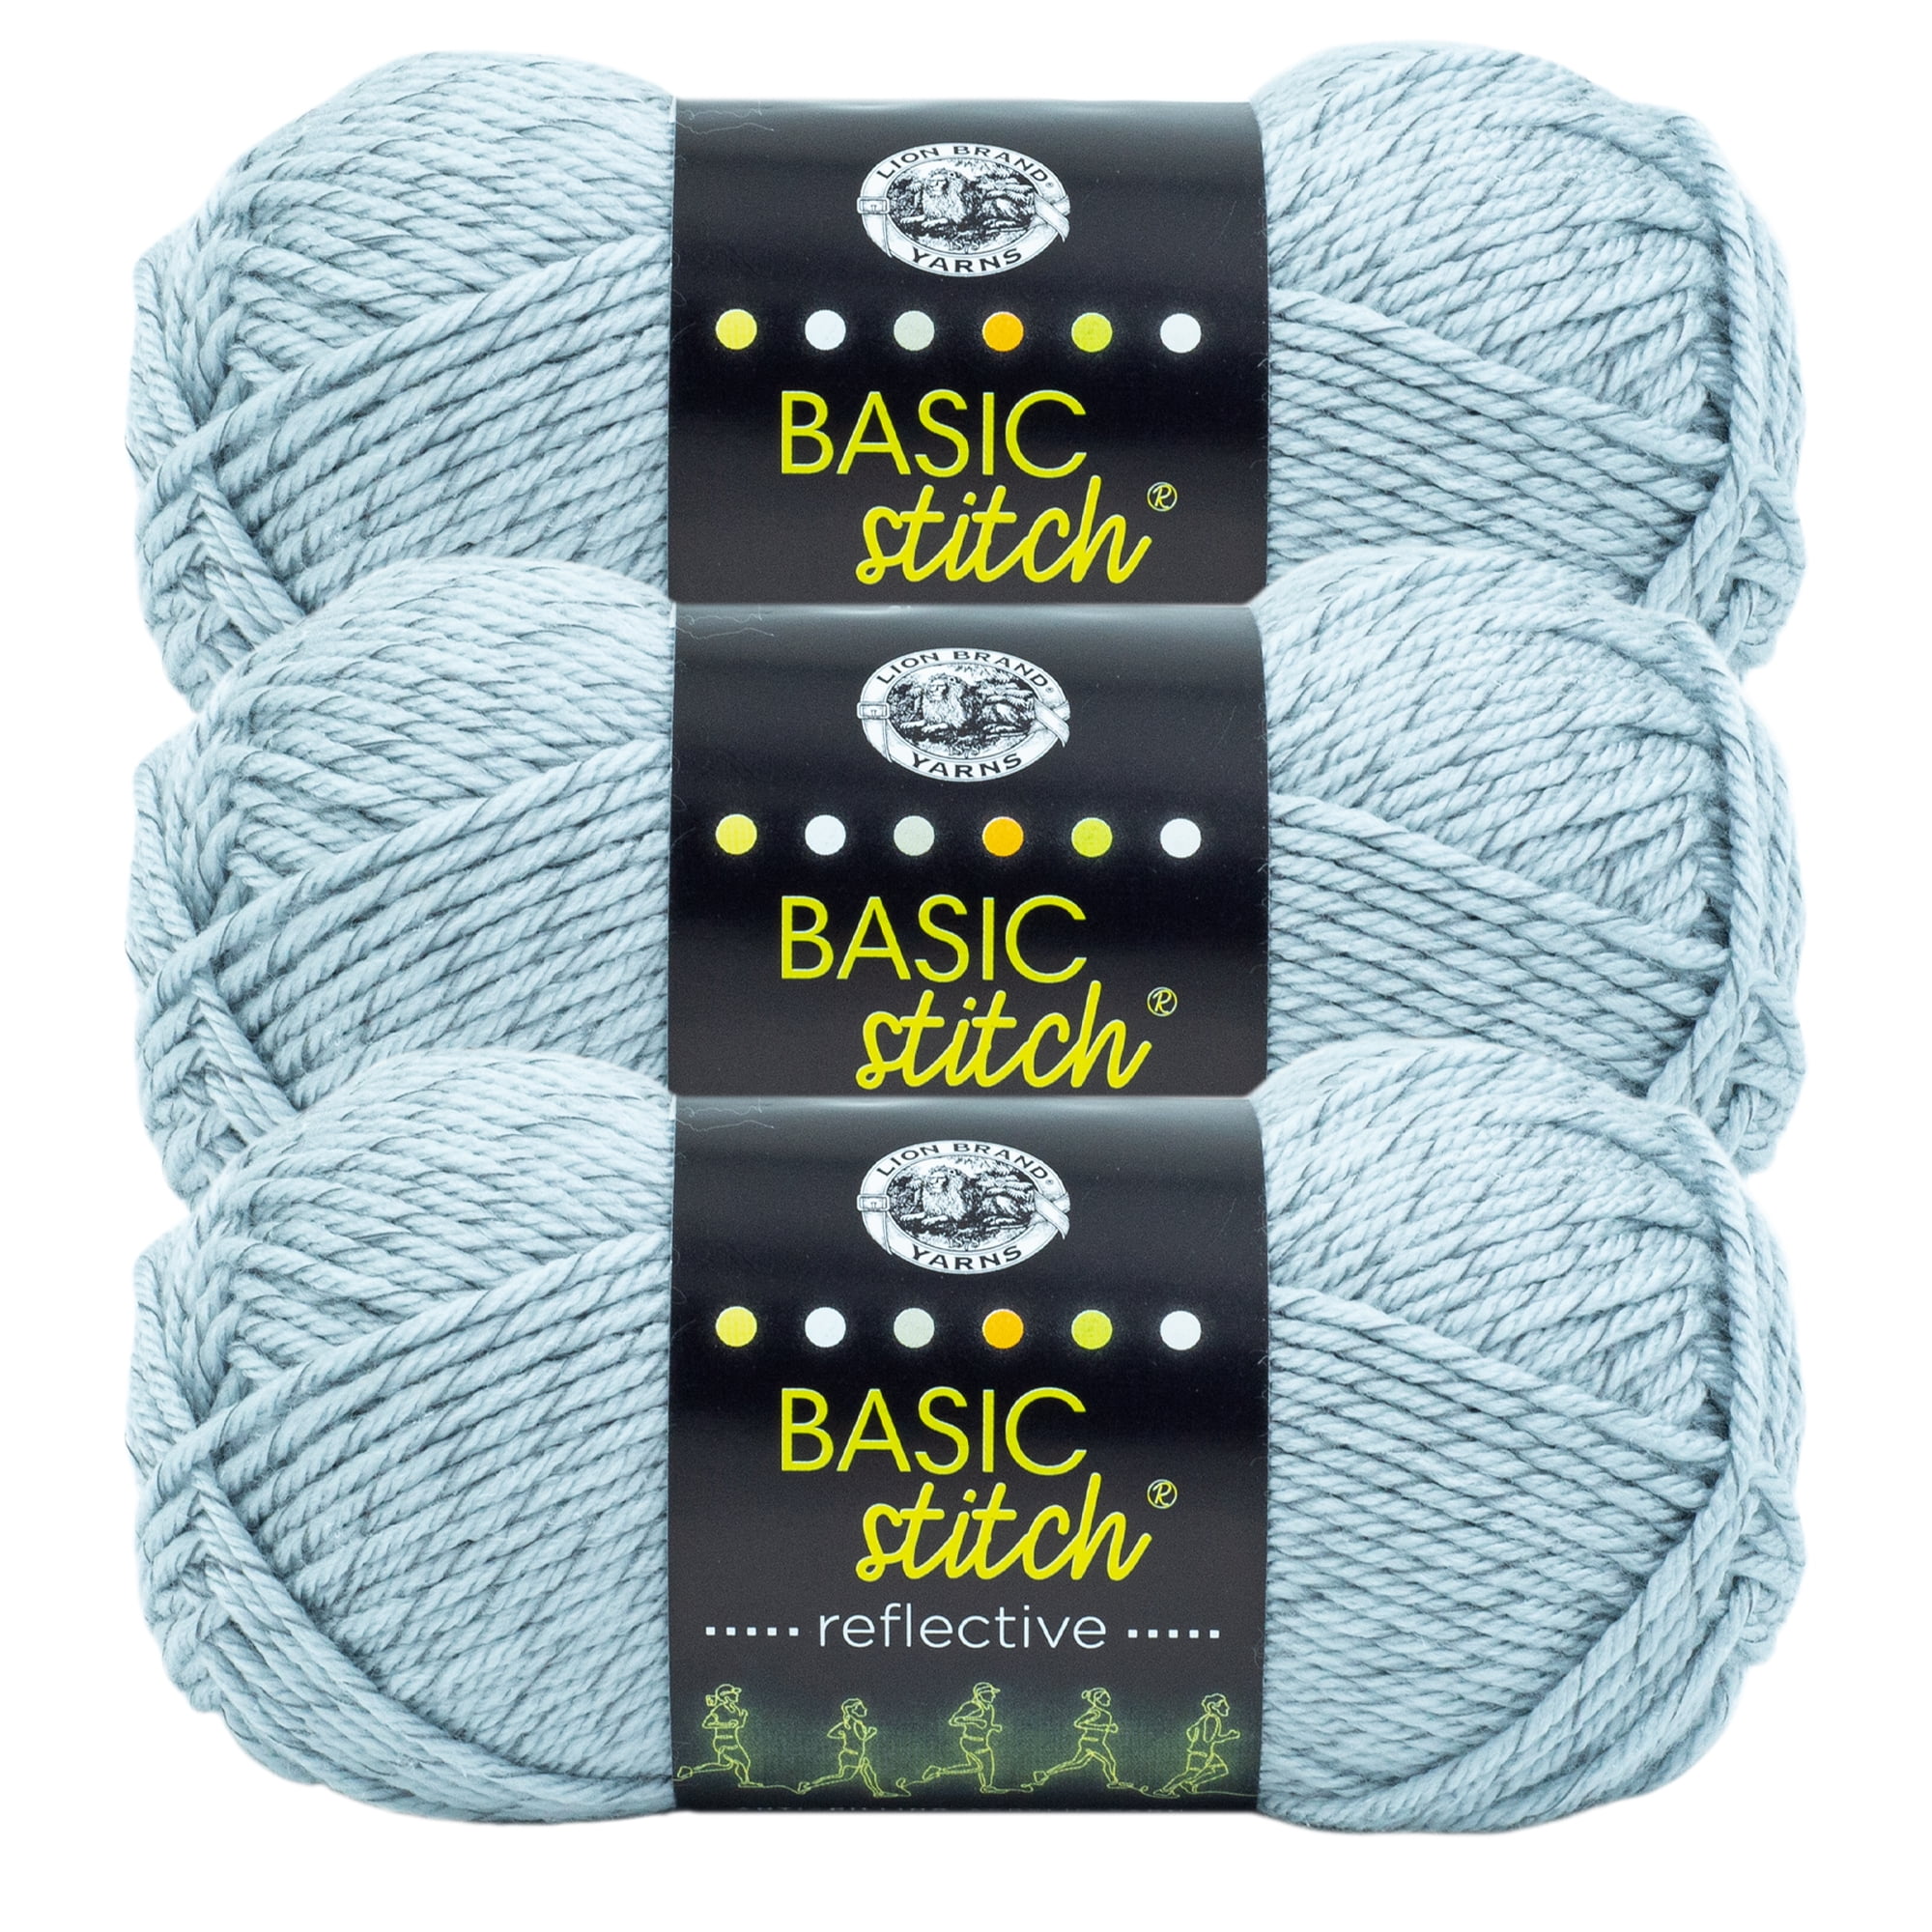 Basic Stitch Anti Pilling™ Yarn by Lion Brand – the Yarn Cave